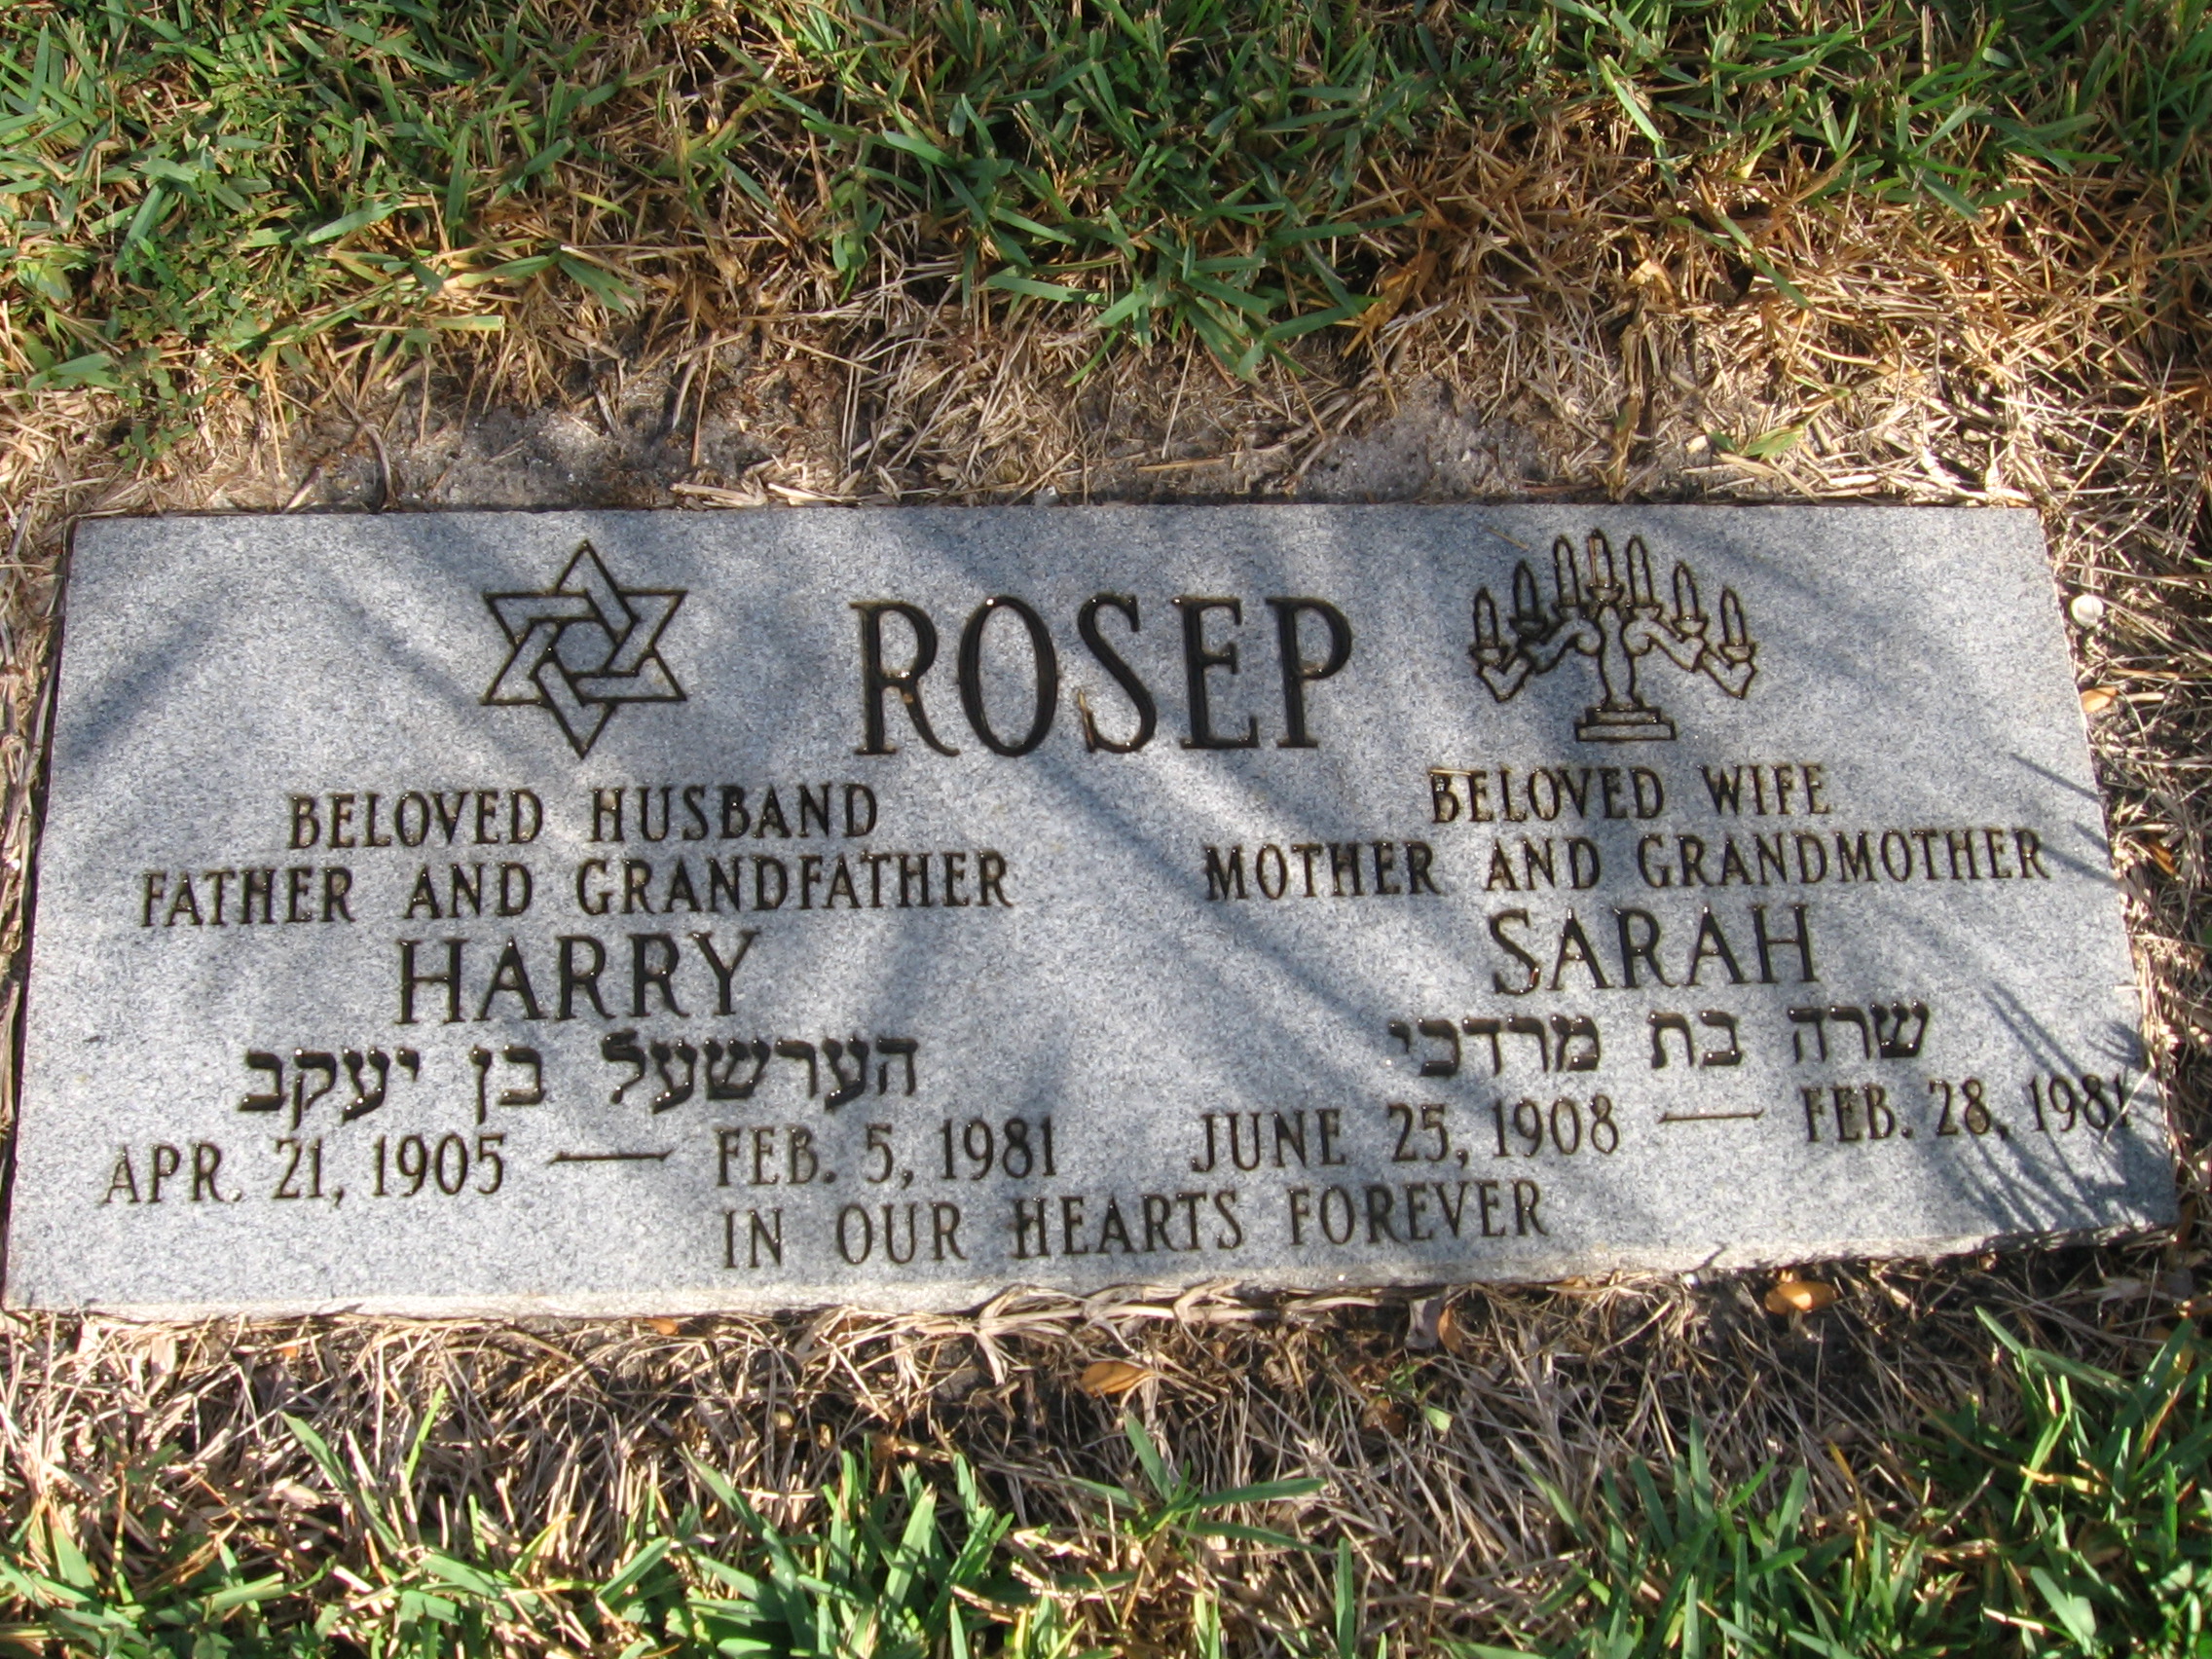 Harry Rosep